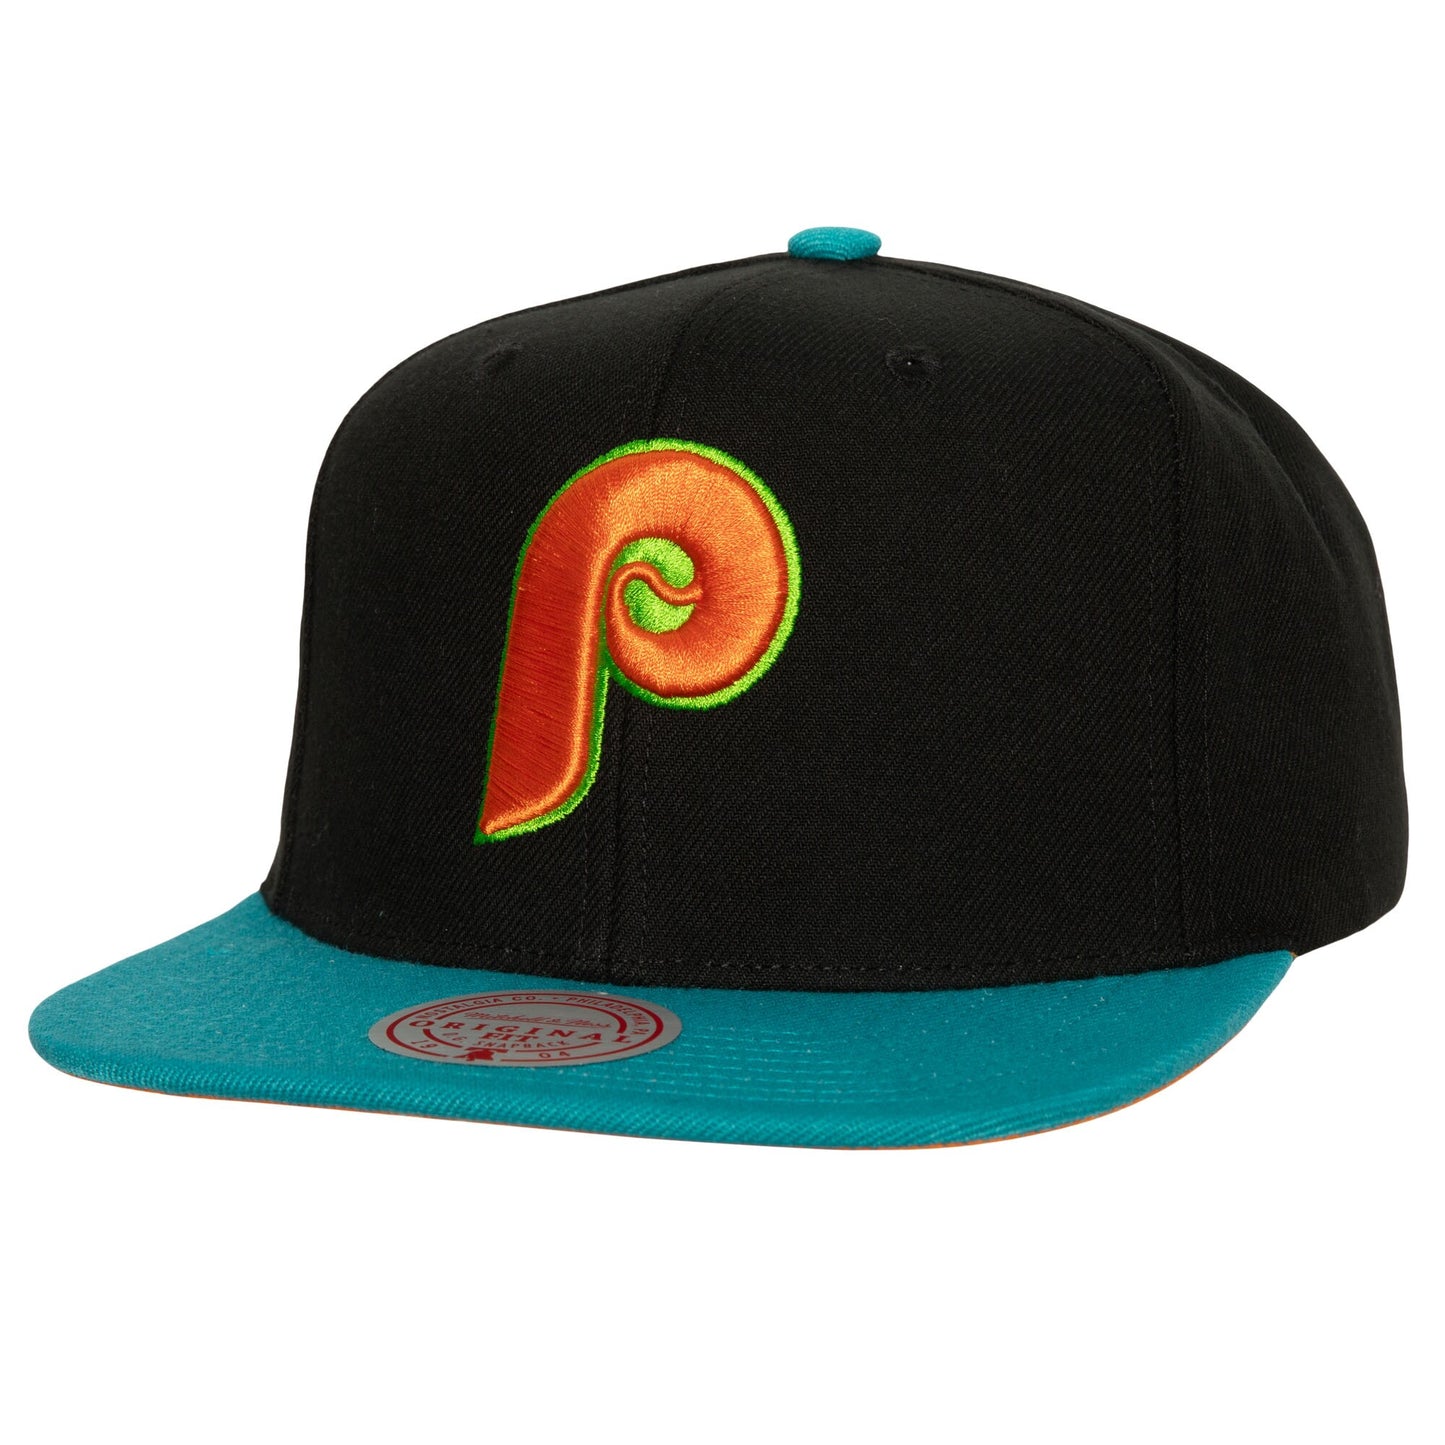 Philadelphia Phillies Mitchell & Ness Citrus Cooler Snapback Hat - Black/Teal